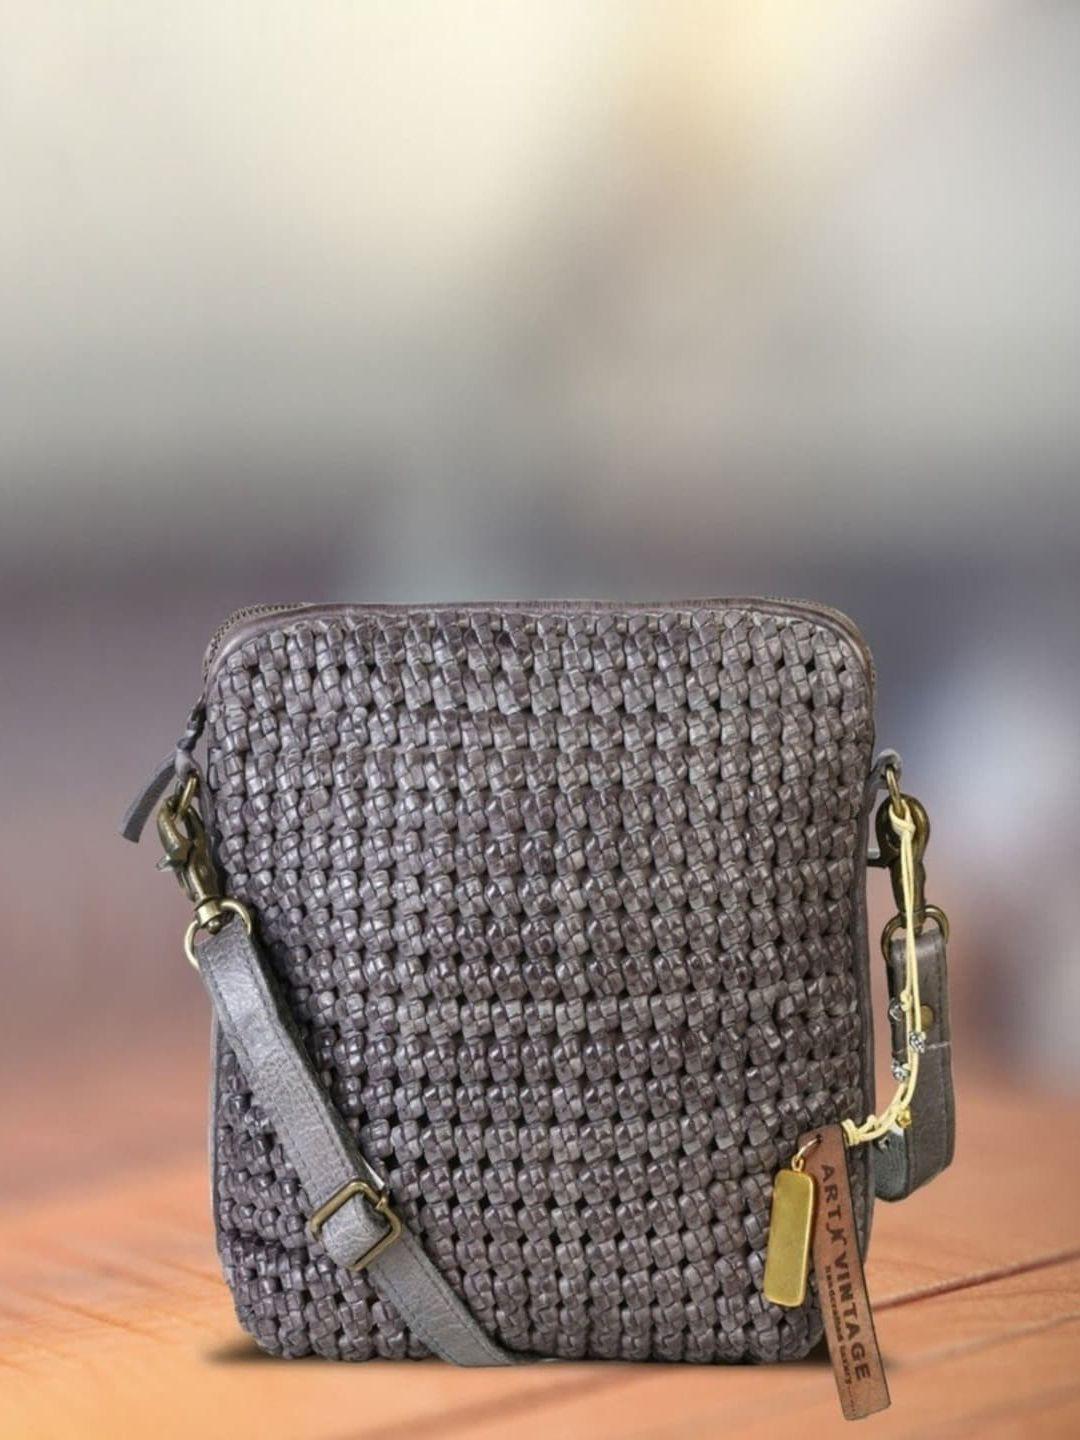 art n vintage textured leather structured sling bag with tasselled